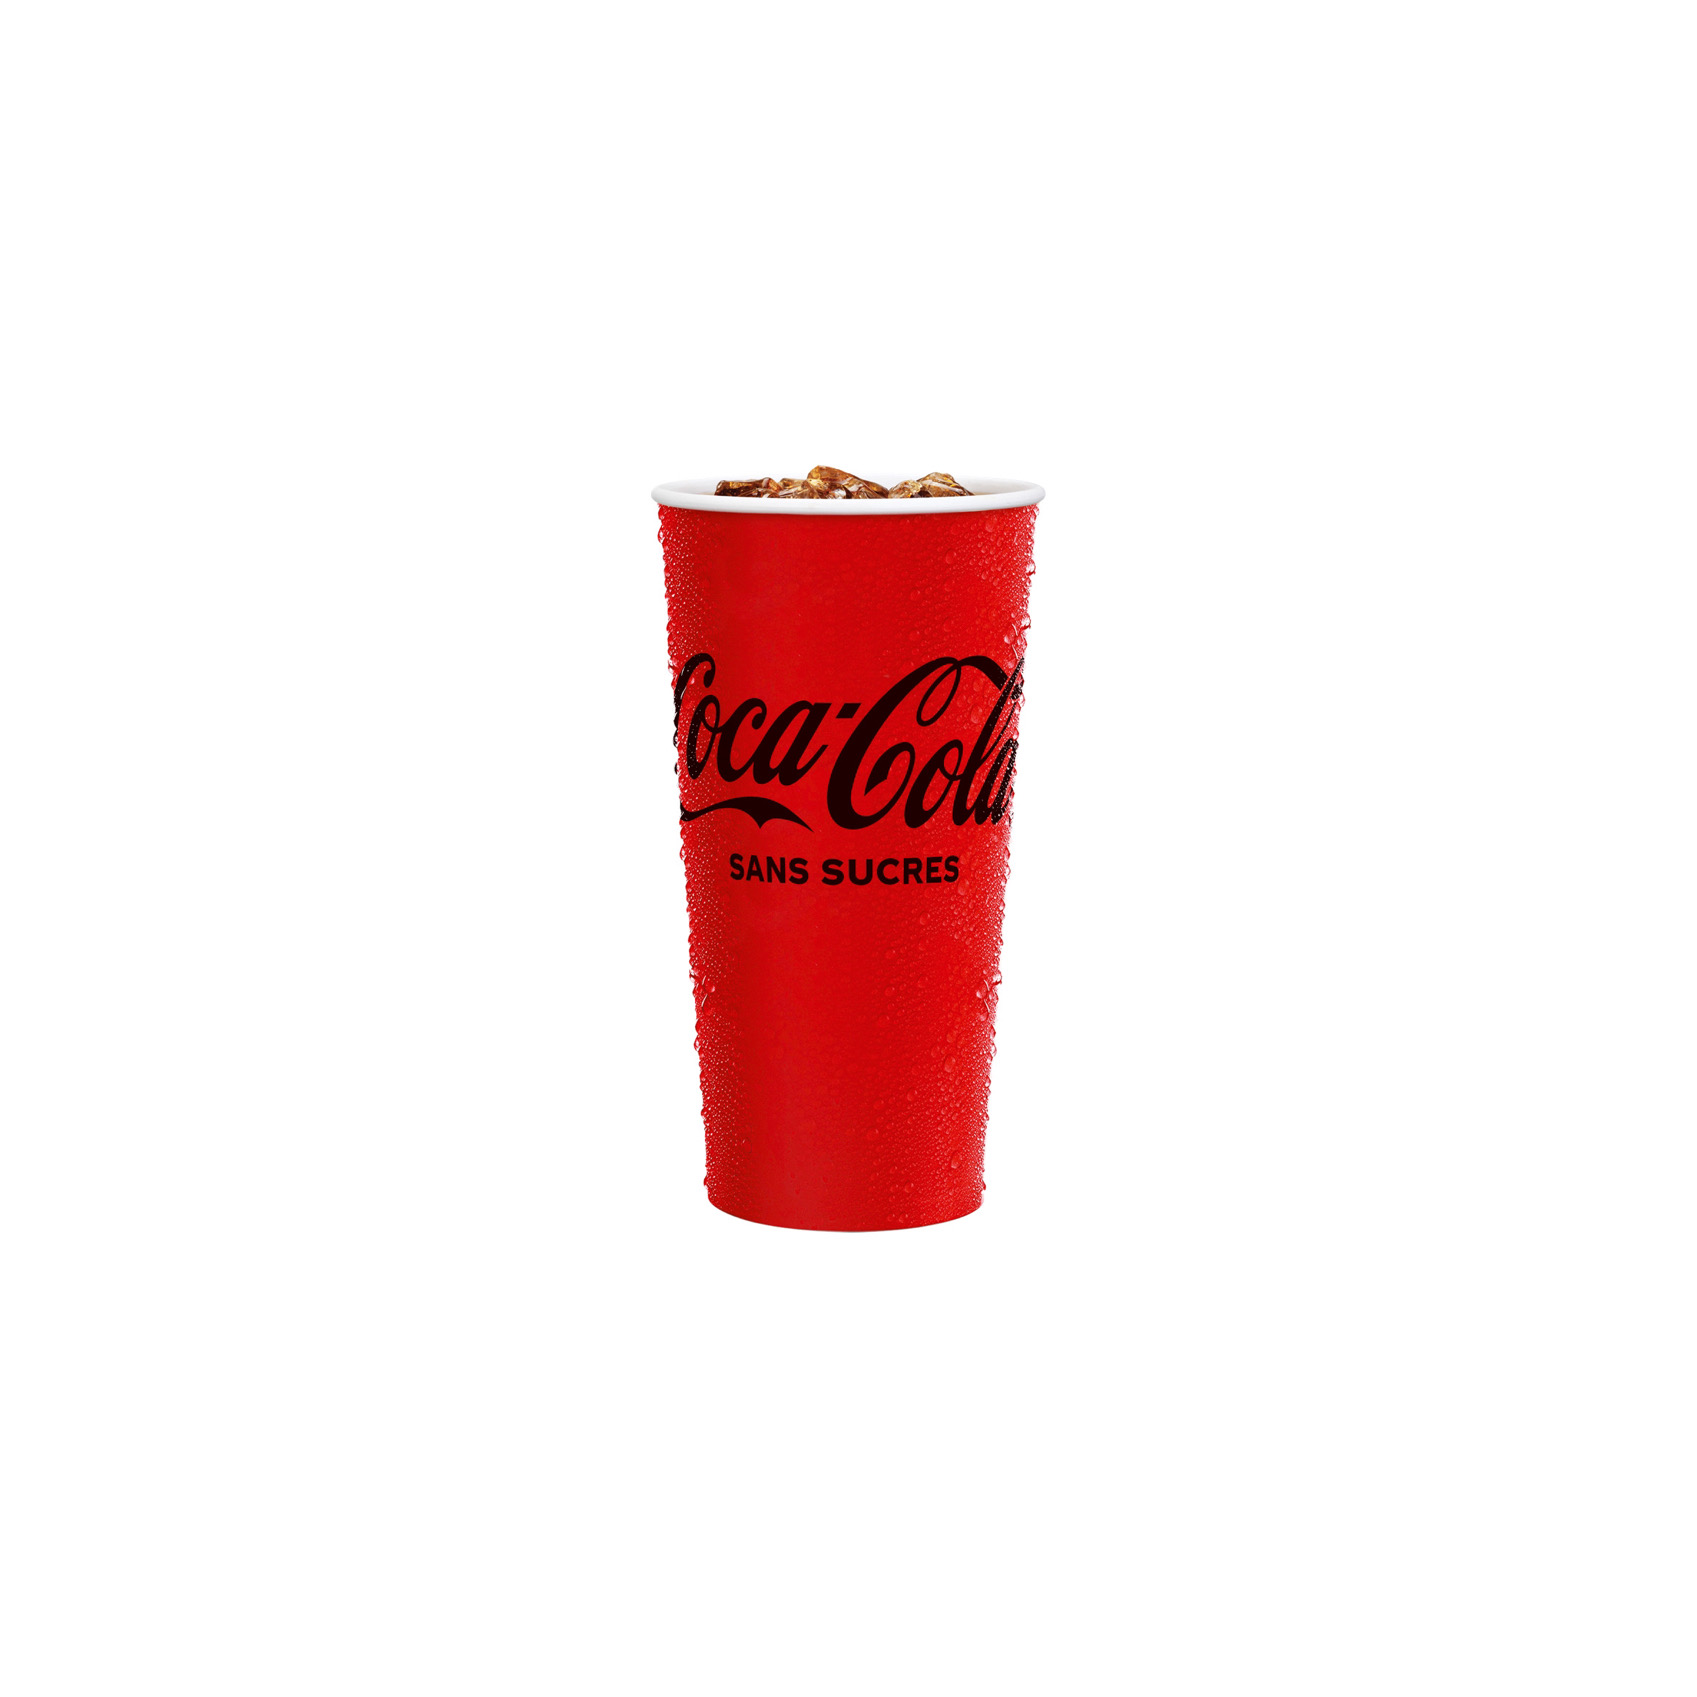 Cup de Coca-Cola sans sucres